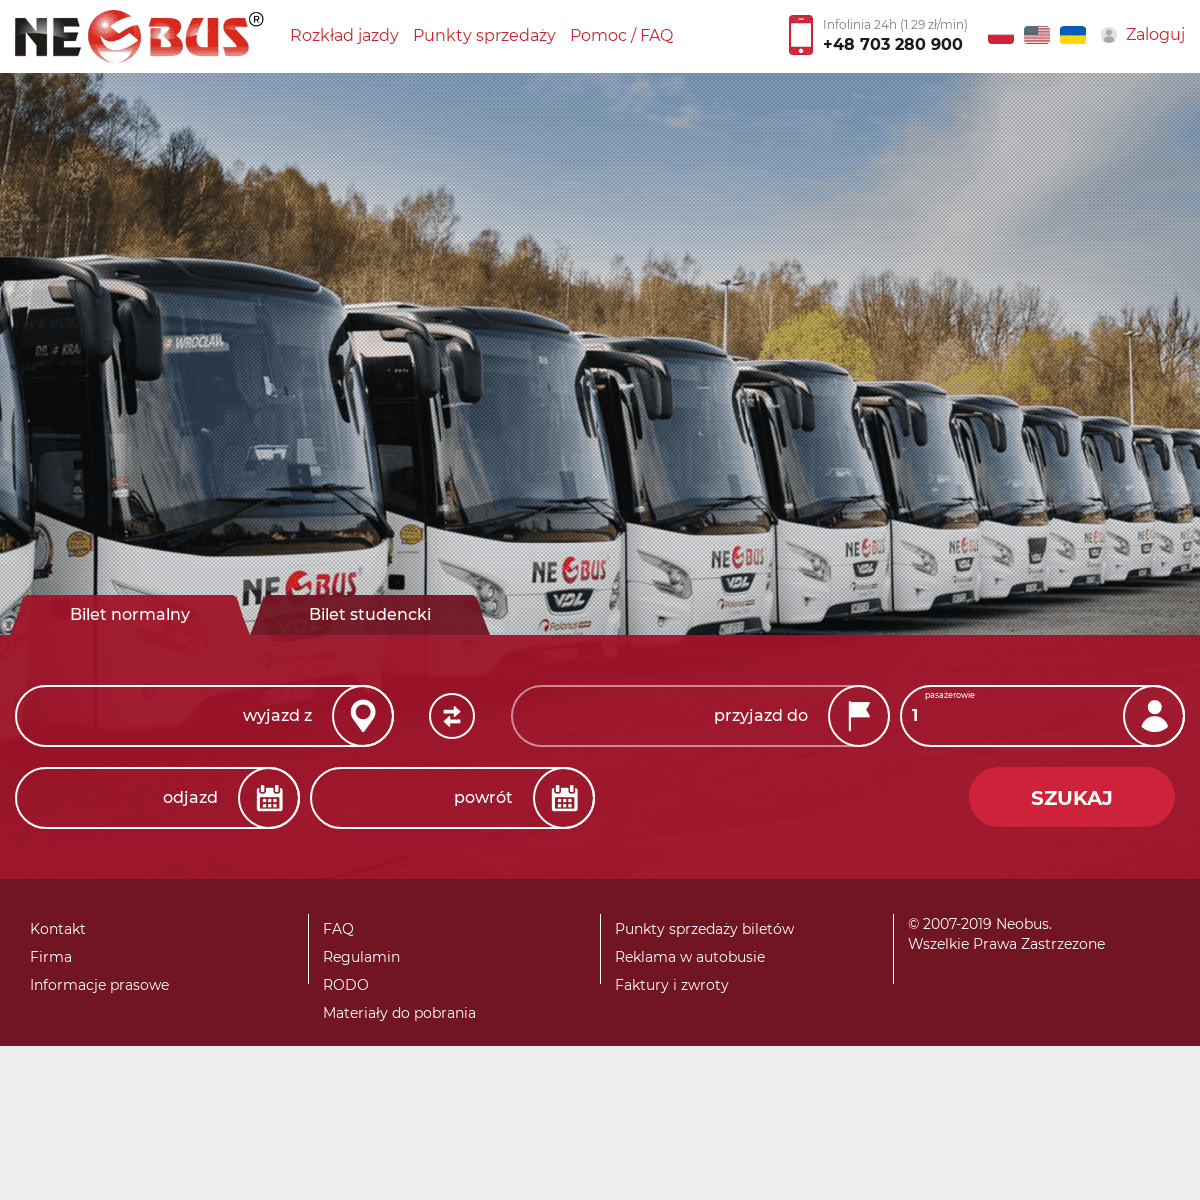 A complete backup of neobus.pl